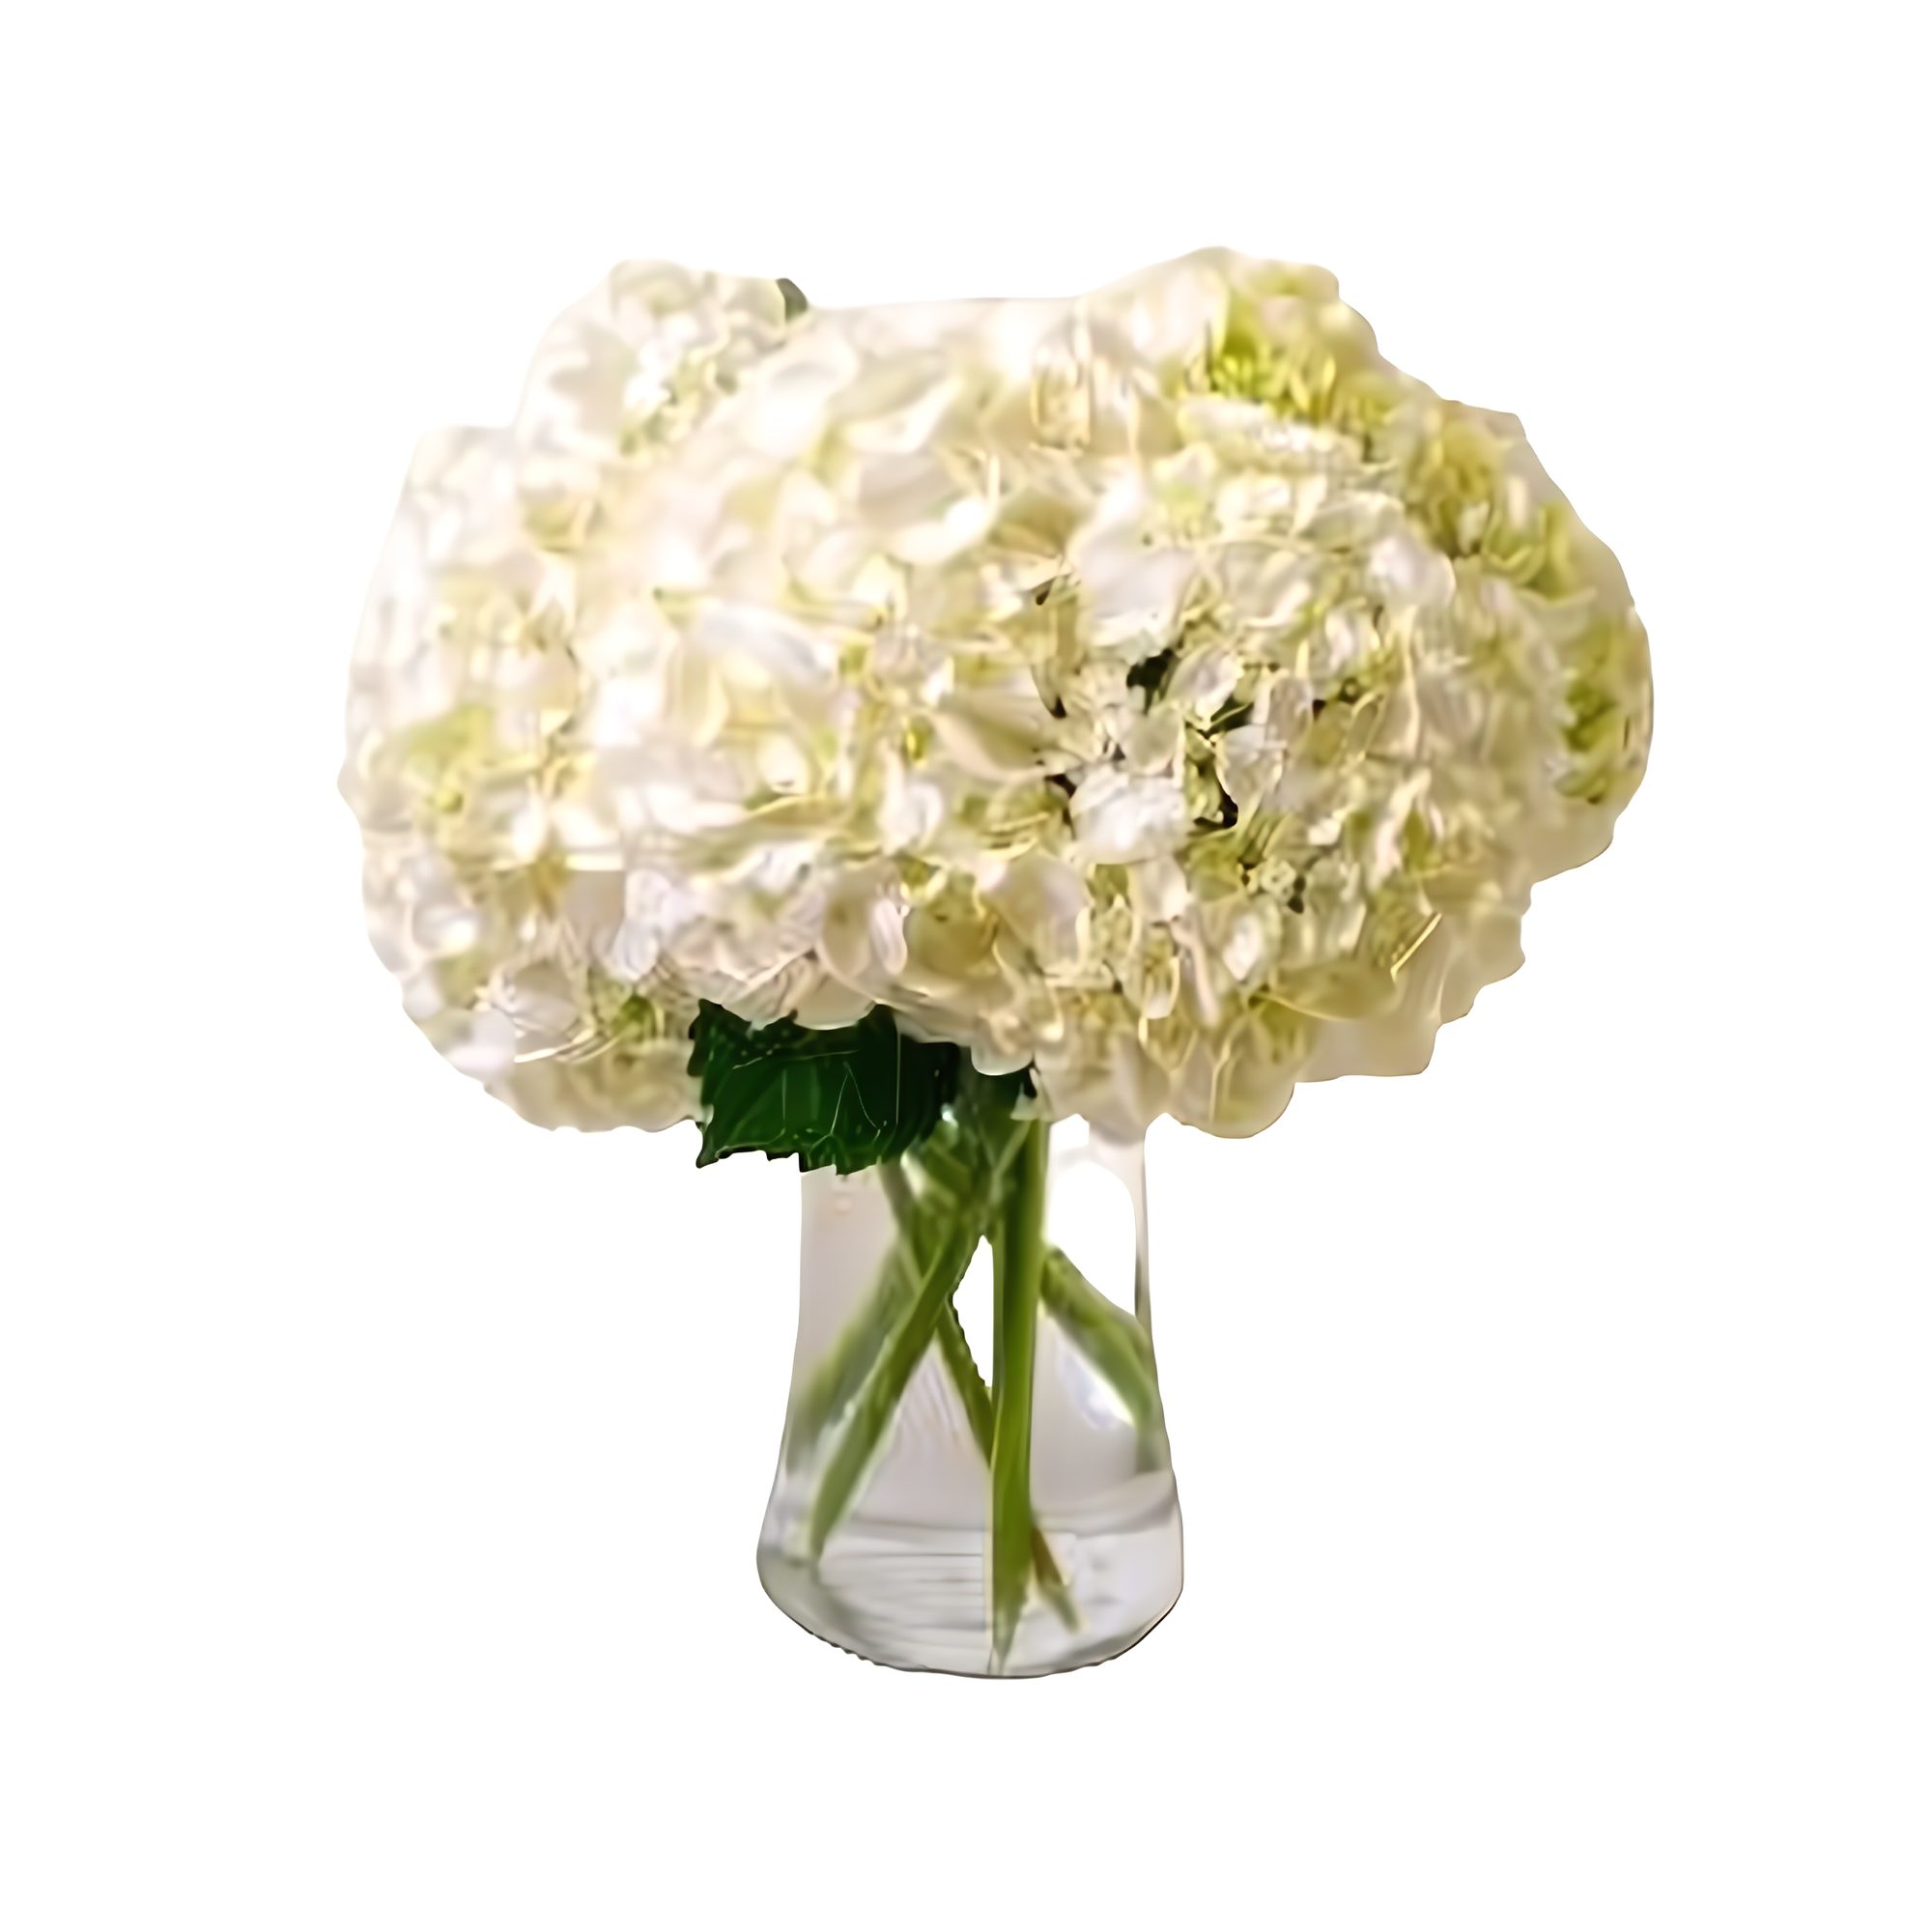 Queens Flower Delivery - Fluffy Hydrangea Bouquet